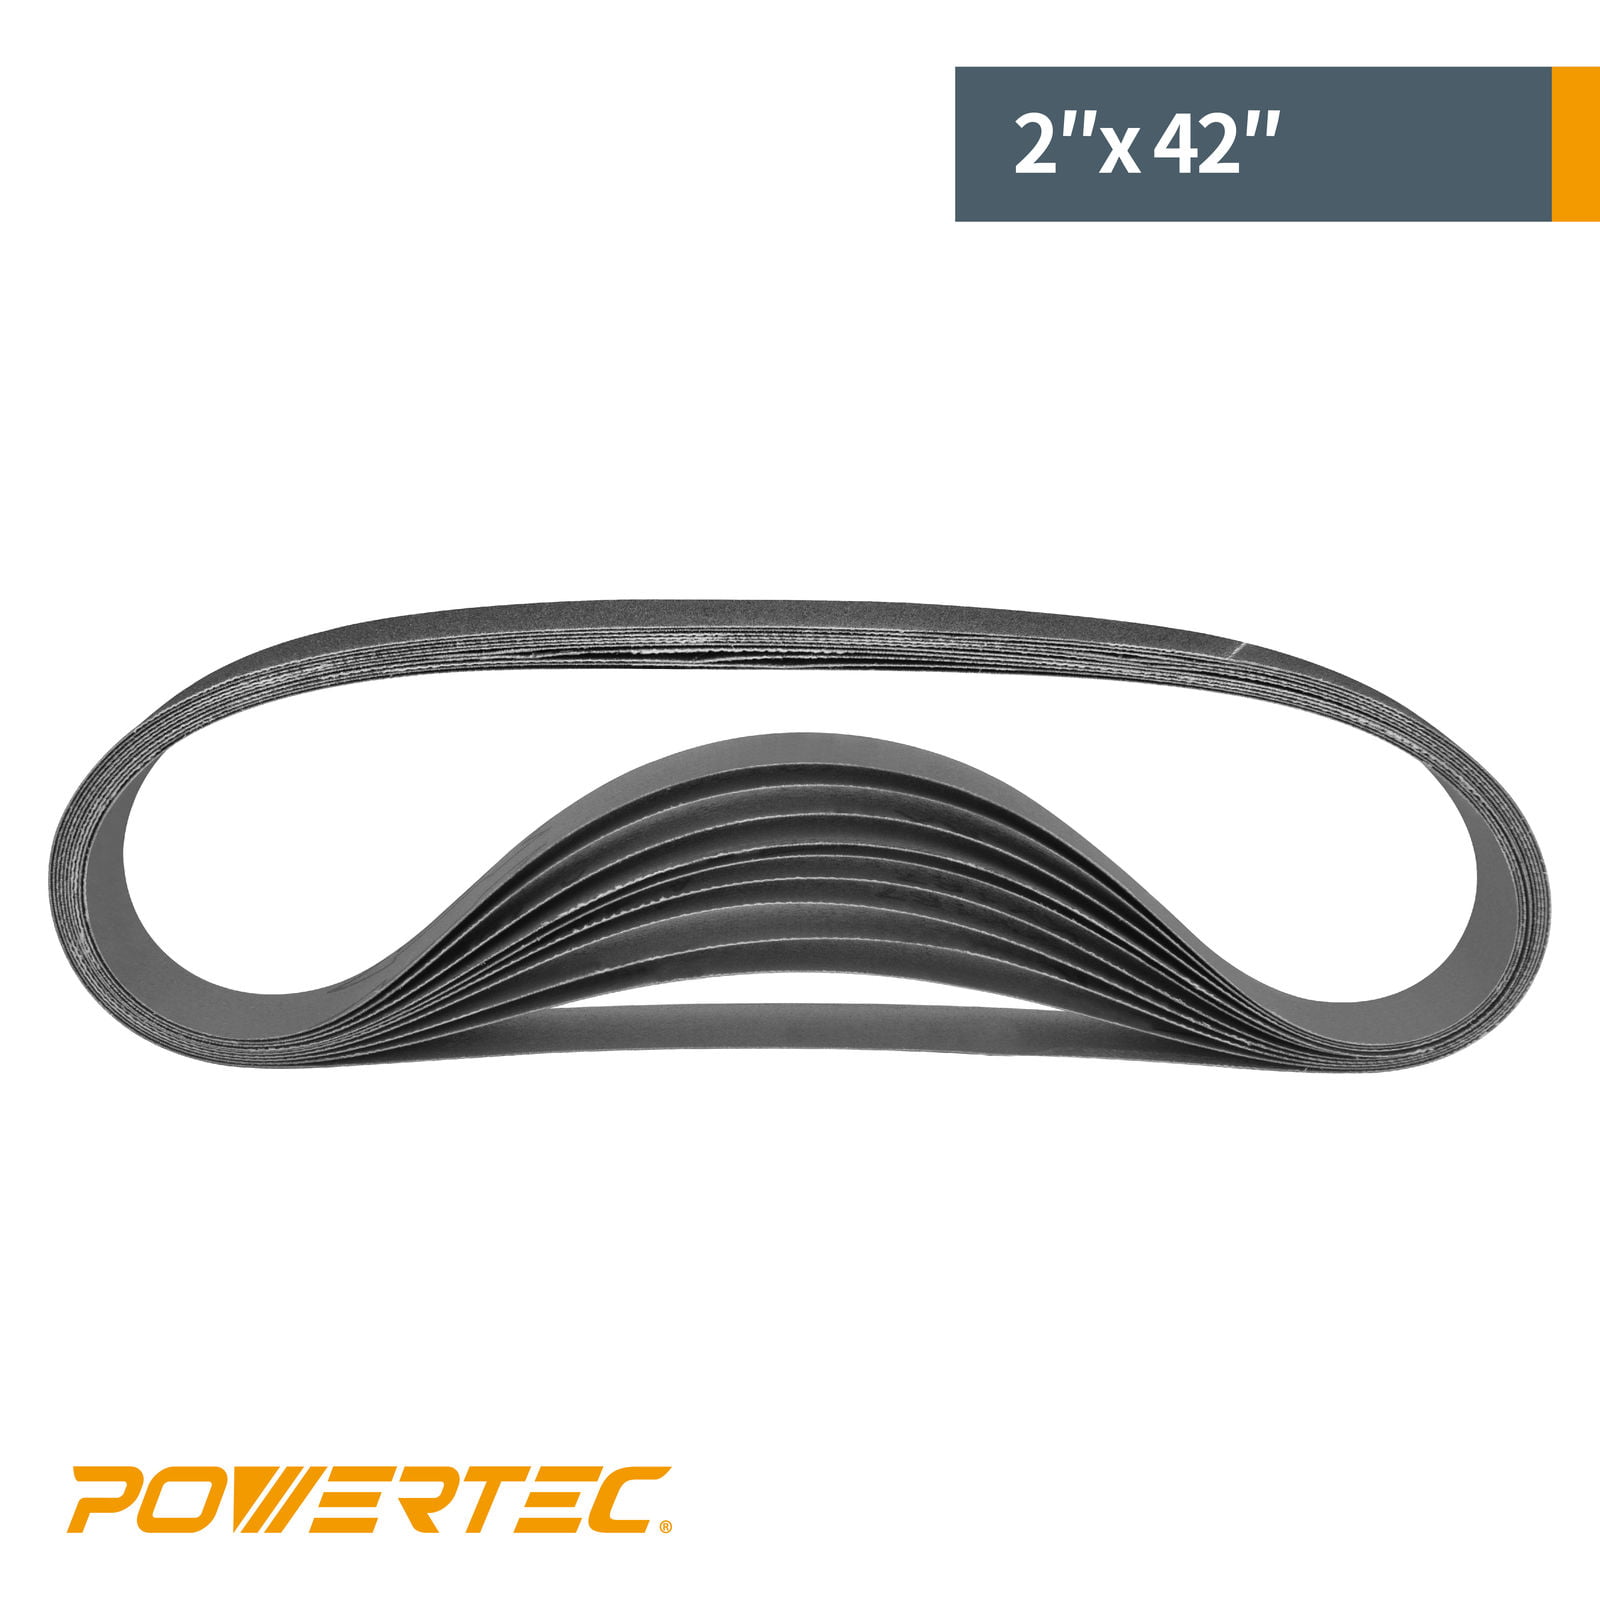 Powertec 2x42 inch 600 Grit Silicon Carbide Sanding Sandpaper Belt 10 Pack Belts 